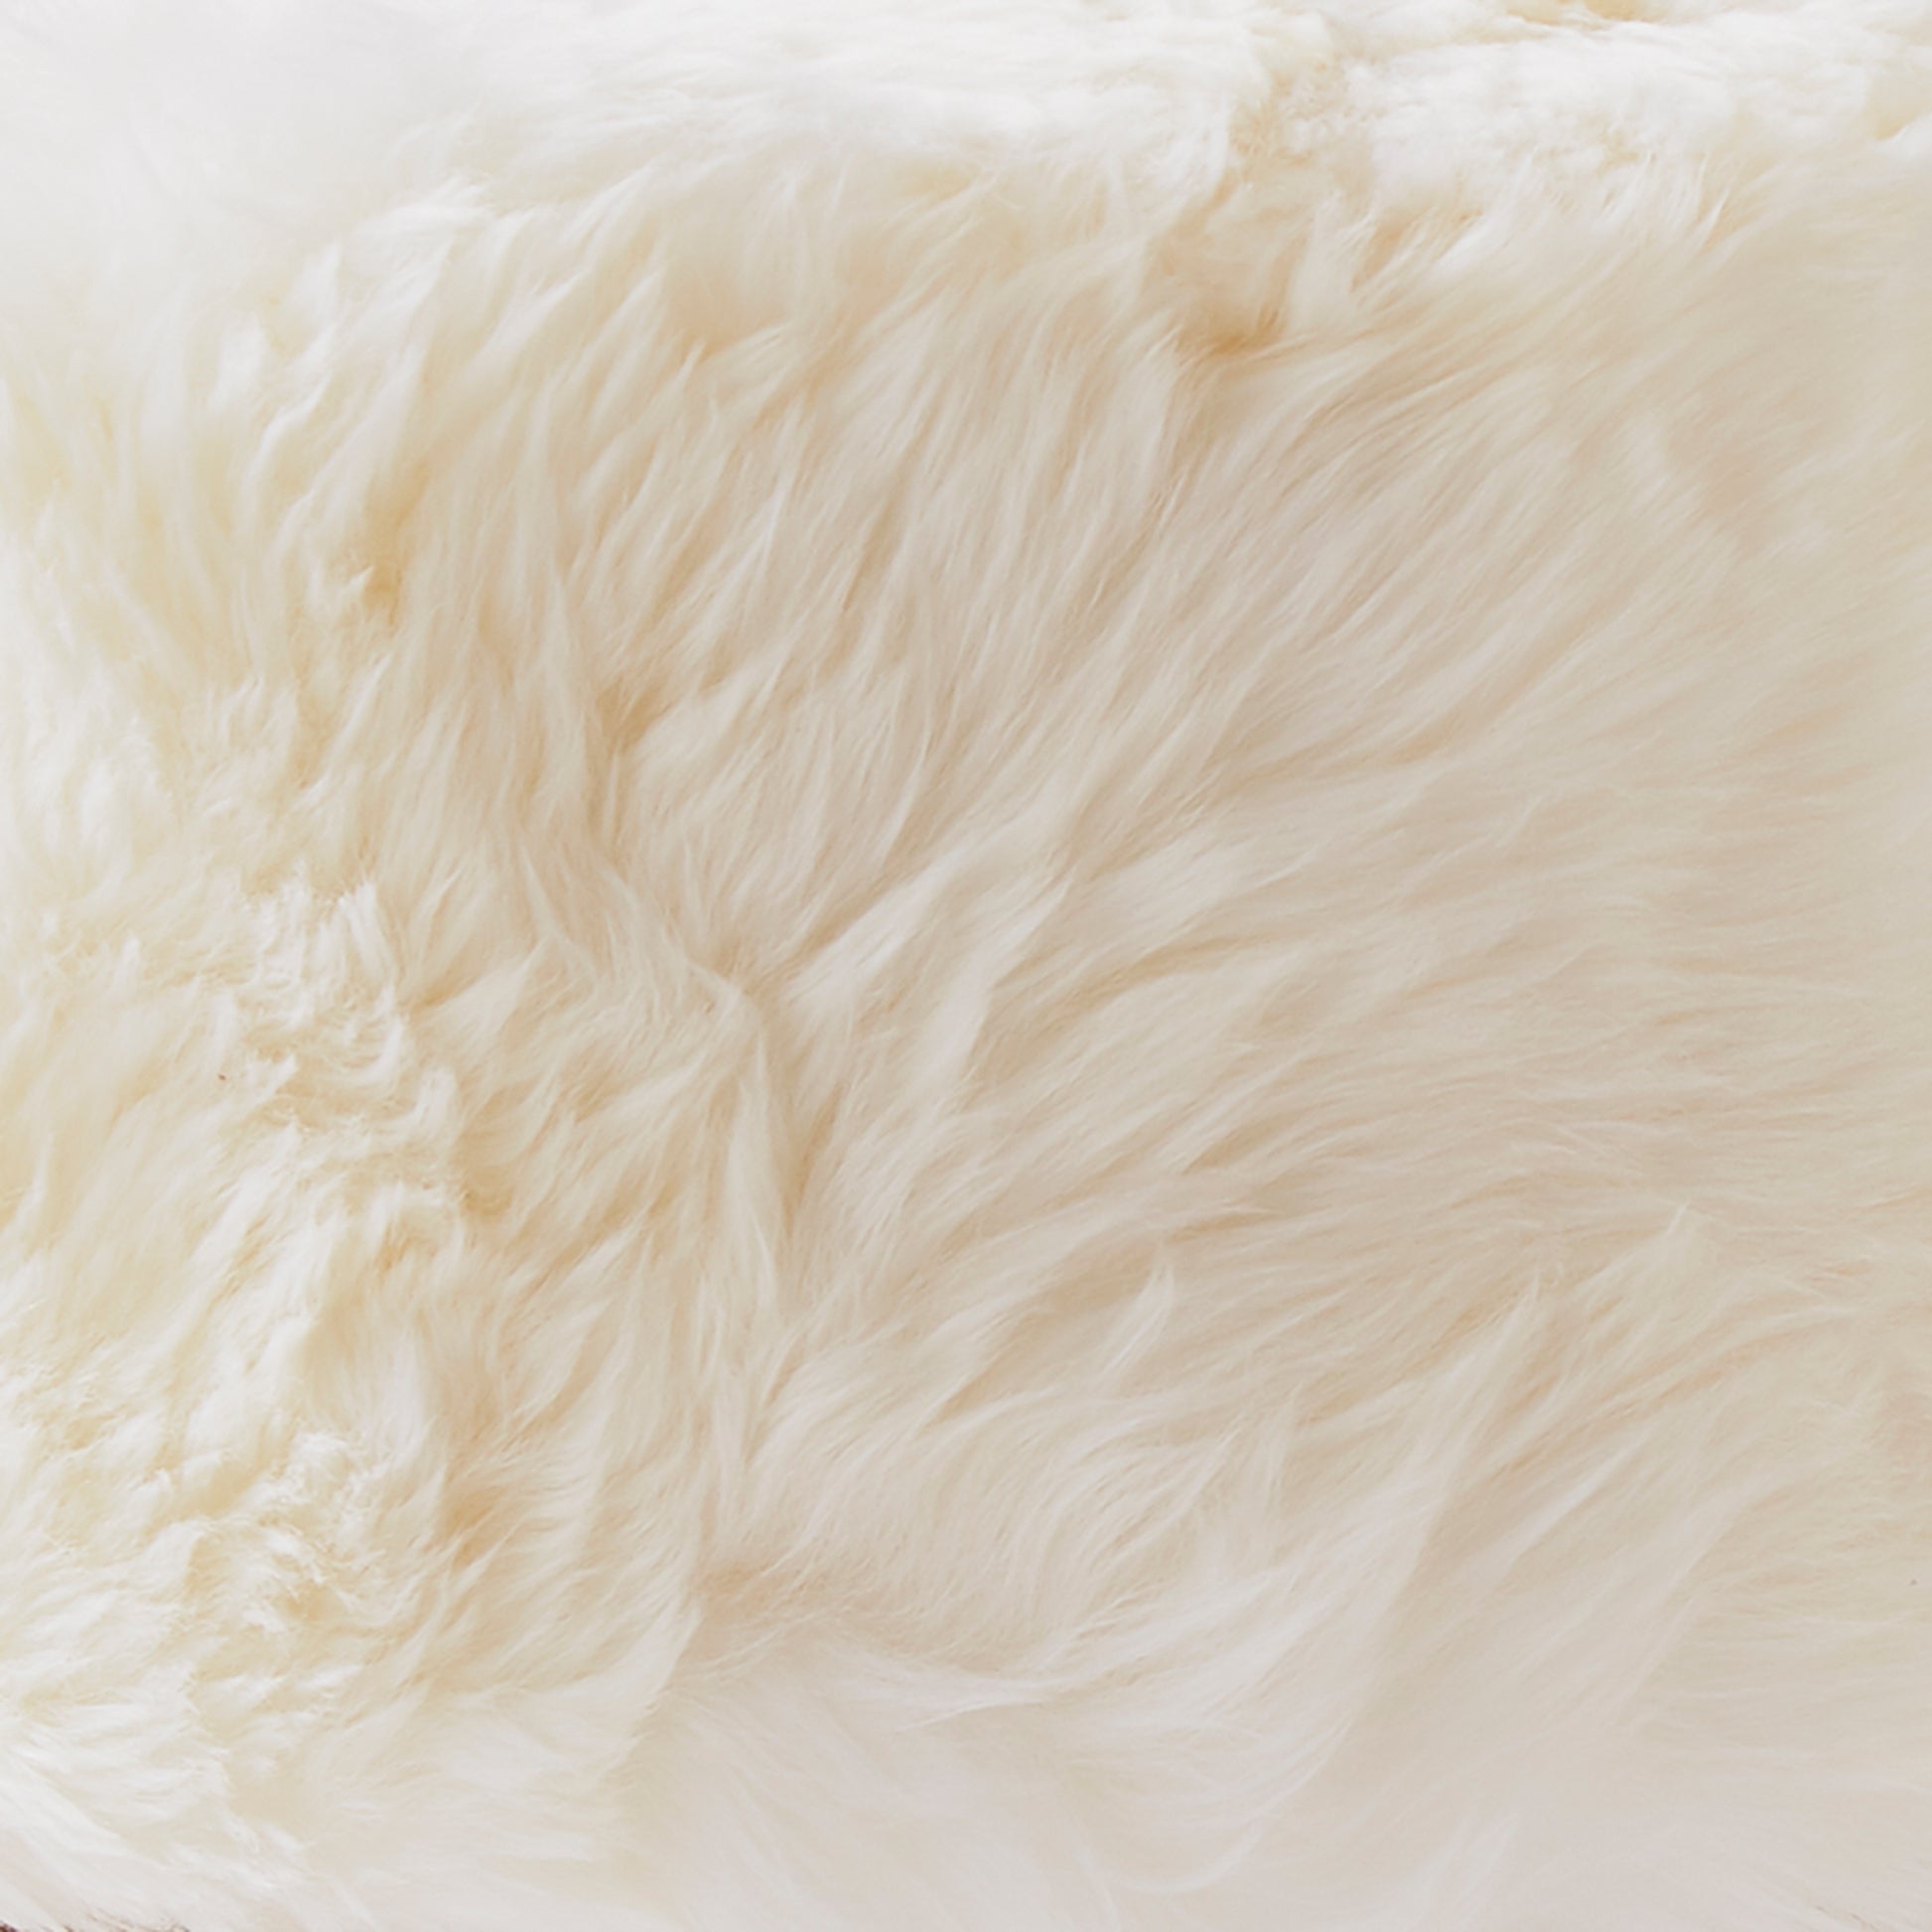 Natural White Genuine Sheepskin Wood Leg Stool - Woodstain - CasaFenix